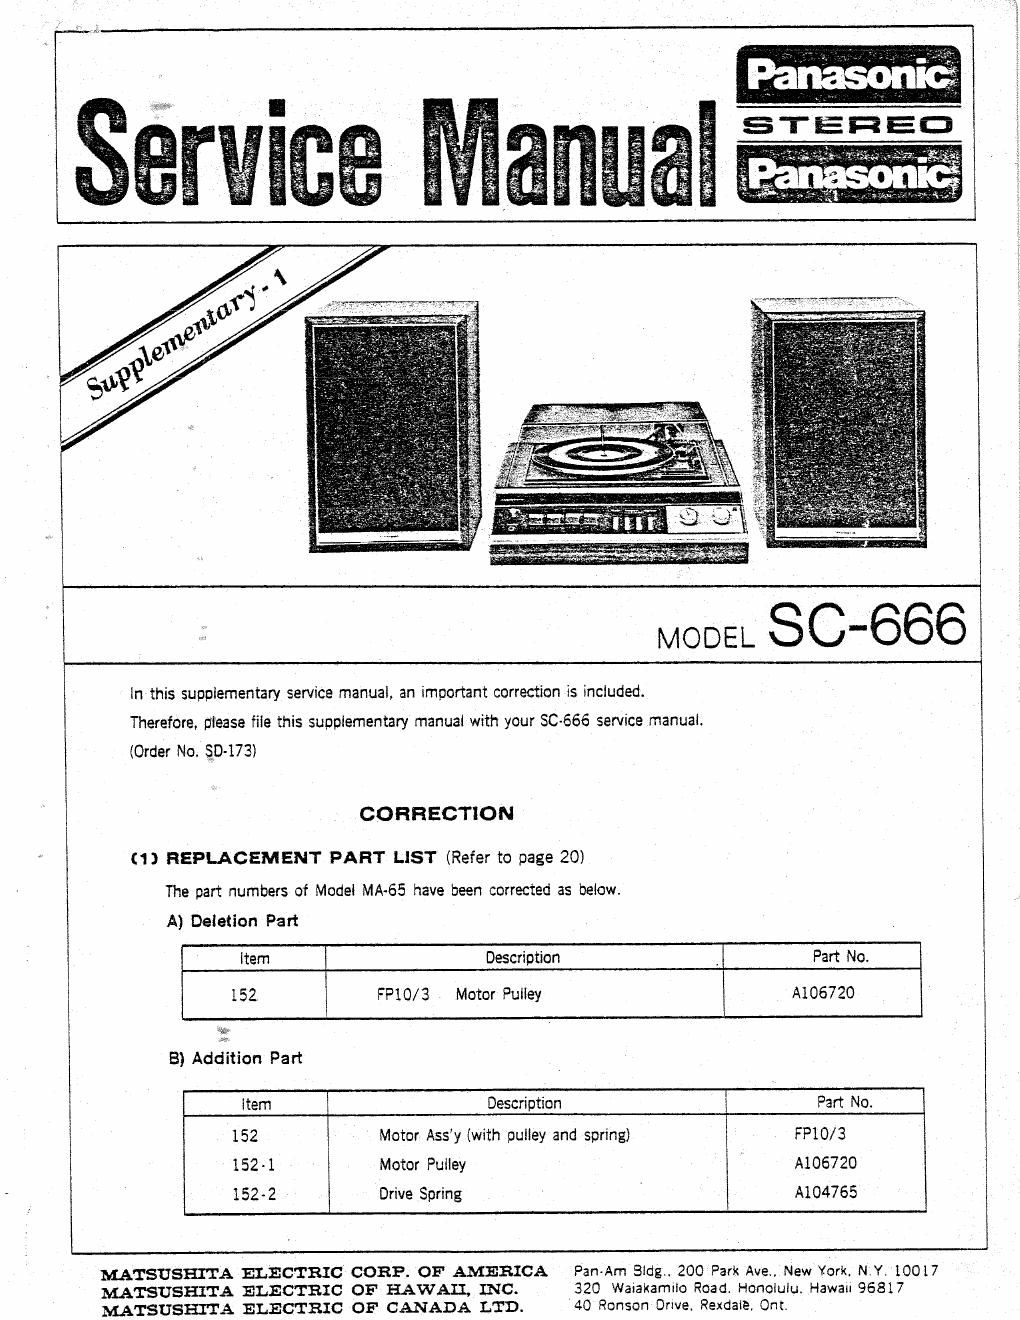 panasonic sc 666 service manual